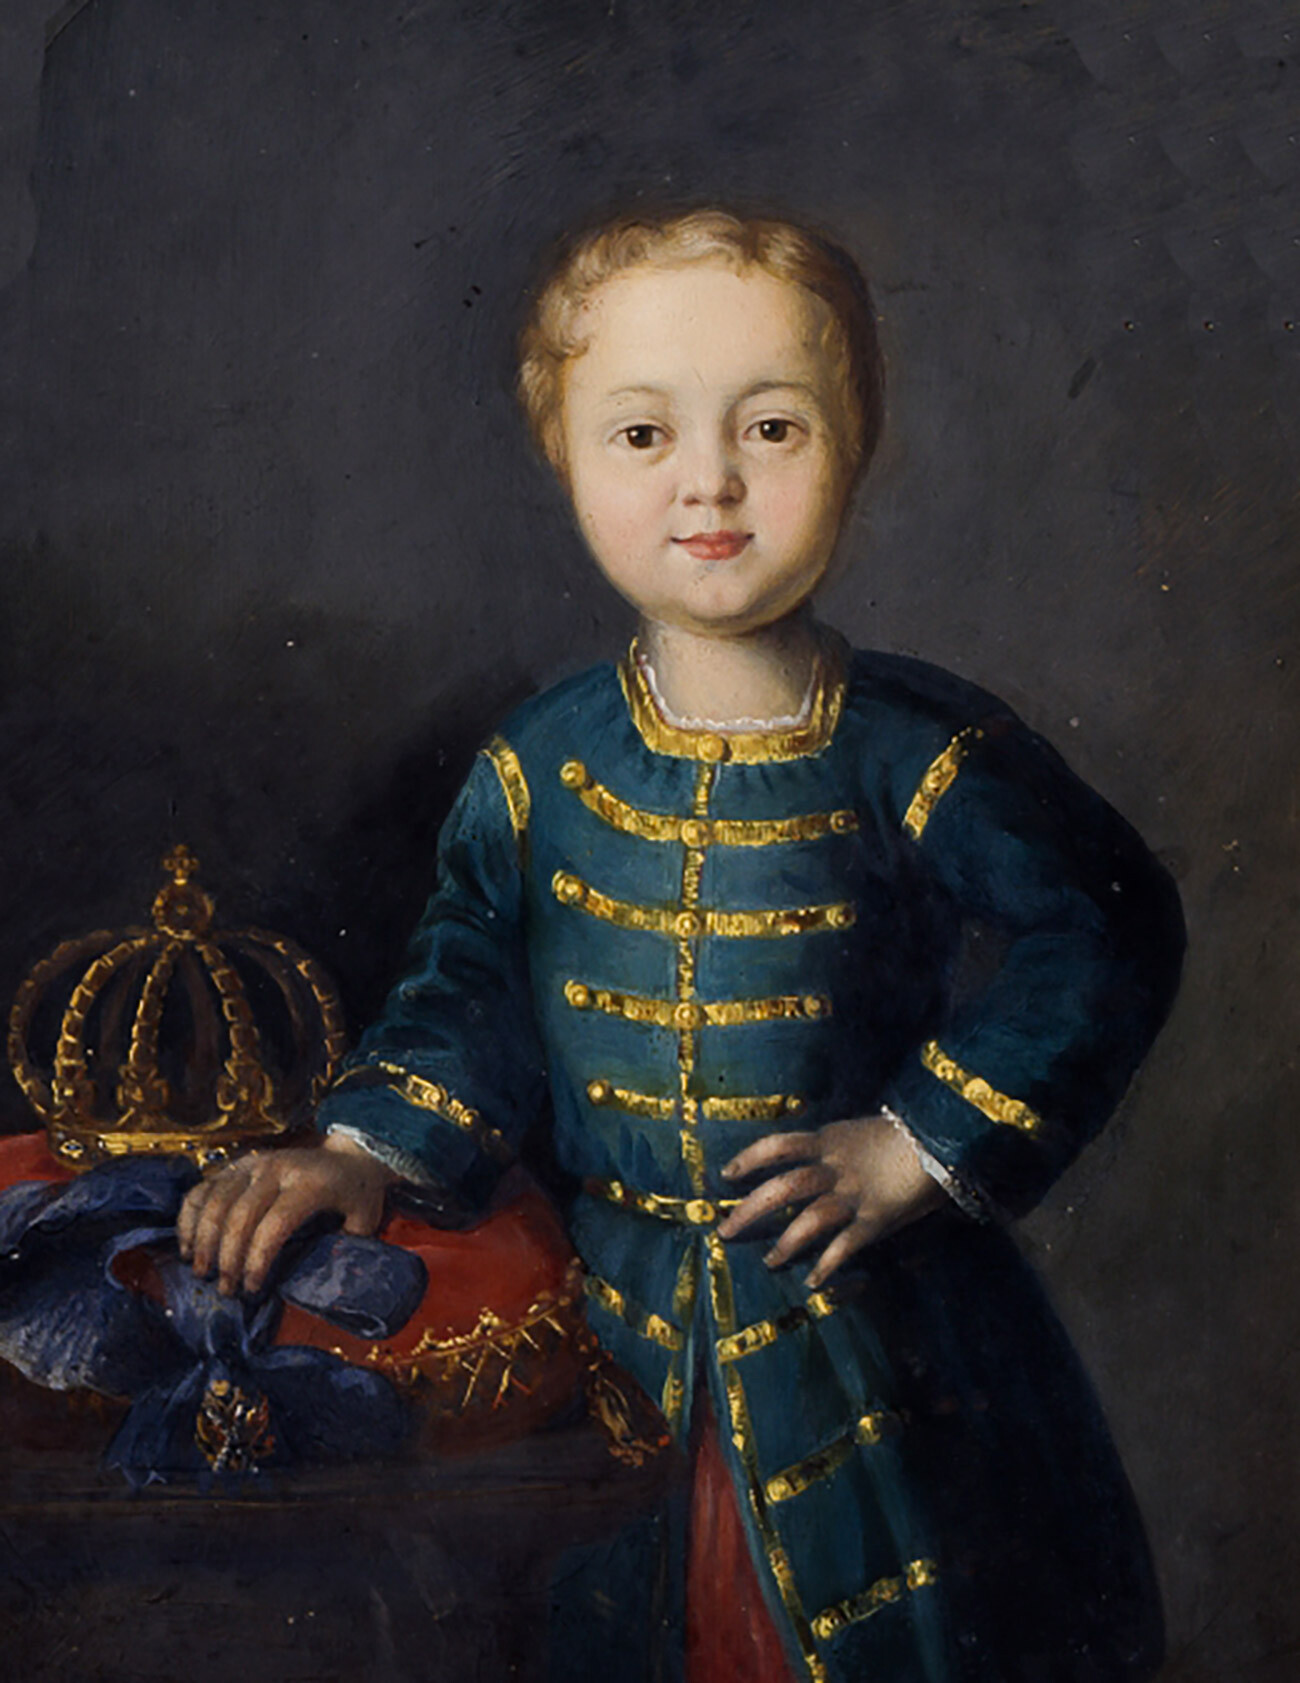  Portrait of the Emperor of Russia Ivan VI Antonovich (1740 – 1764)